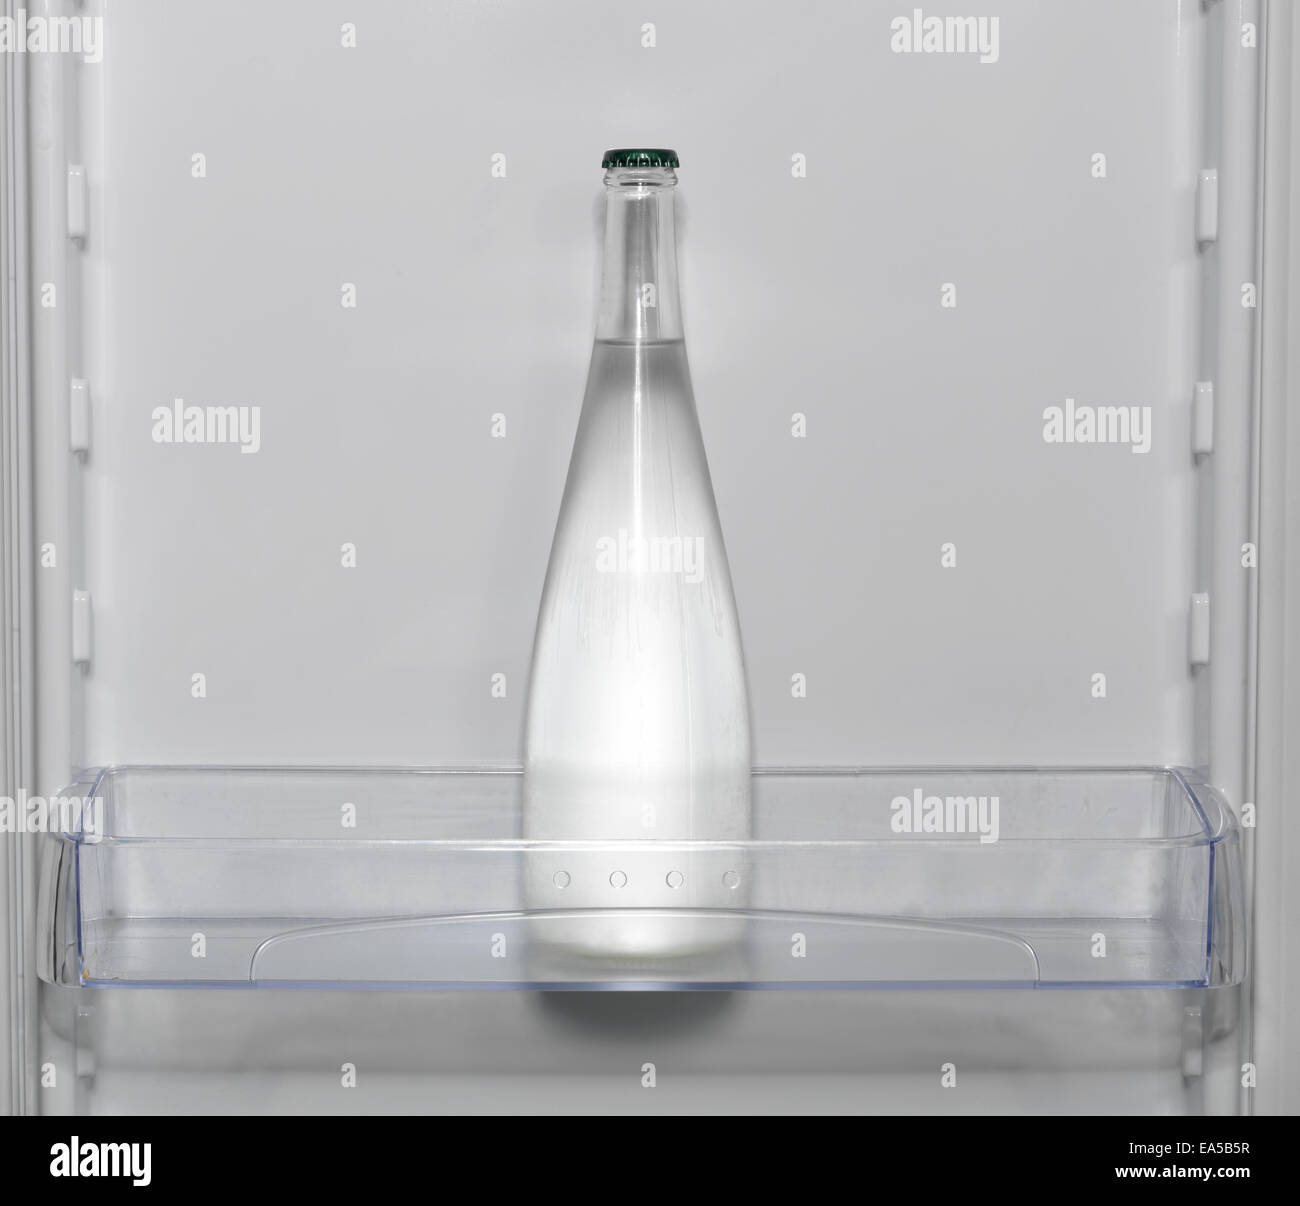 https://c8.alamy.com/comp/EA5B5R/glass-water-bottle-in-refrigerator-EA5B5R.jpg